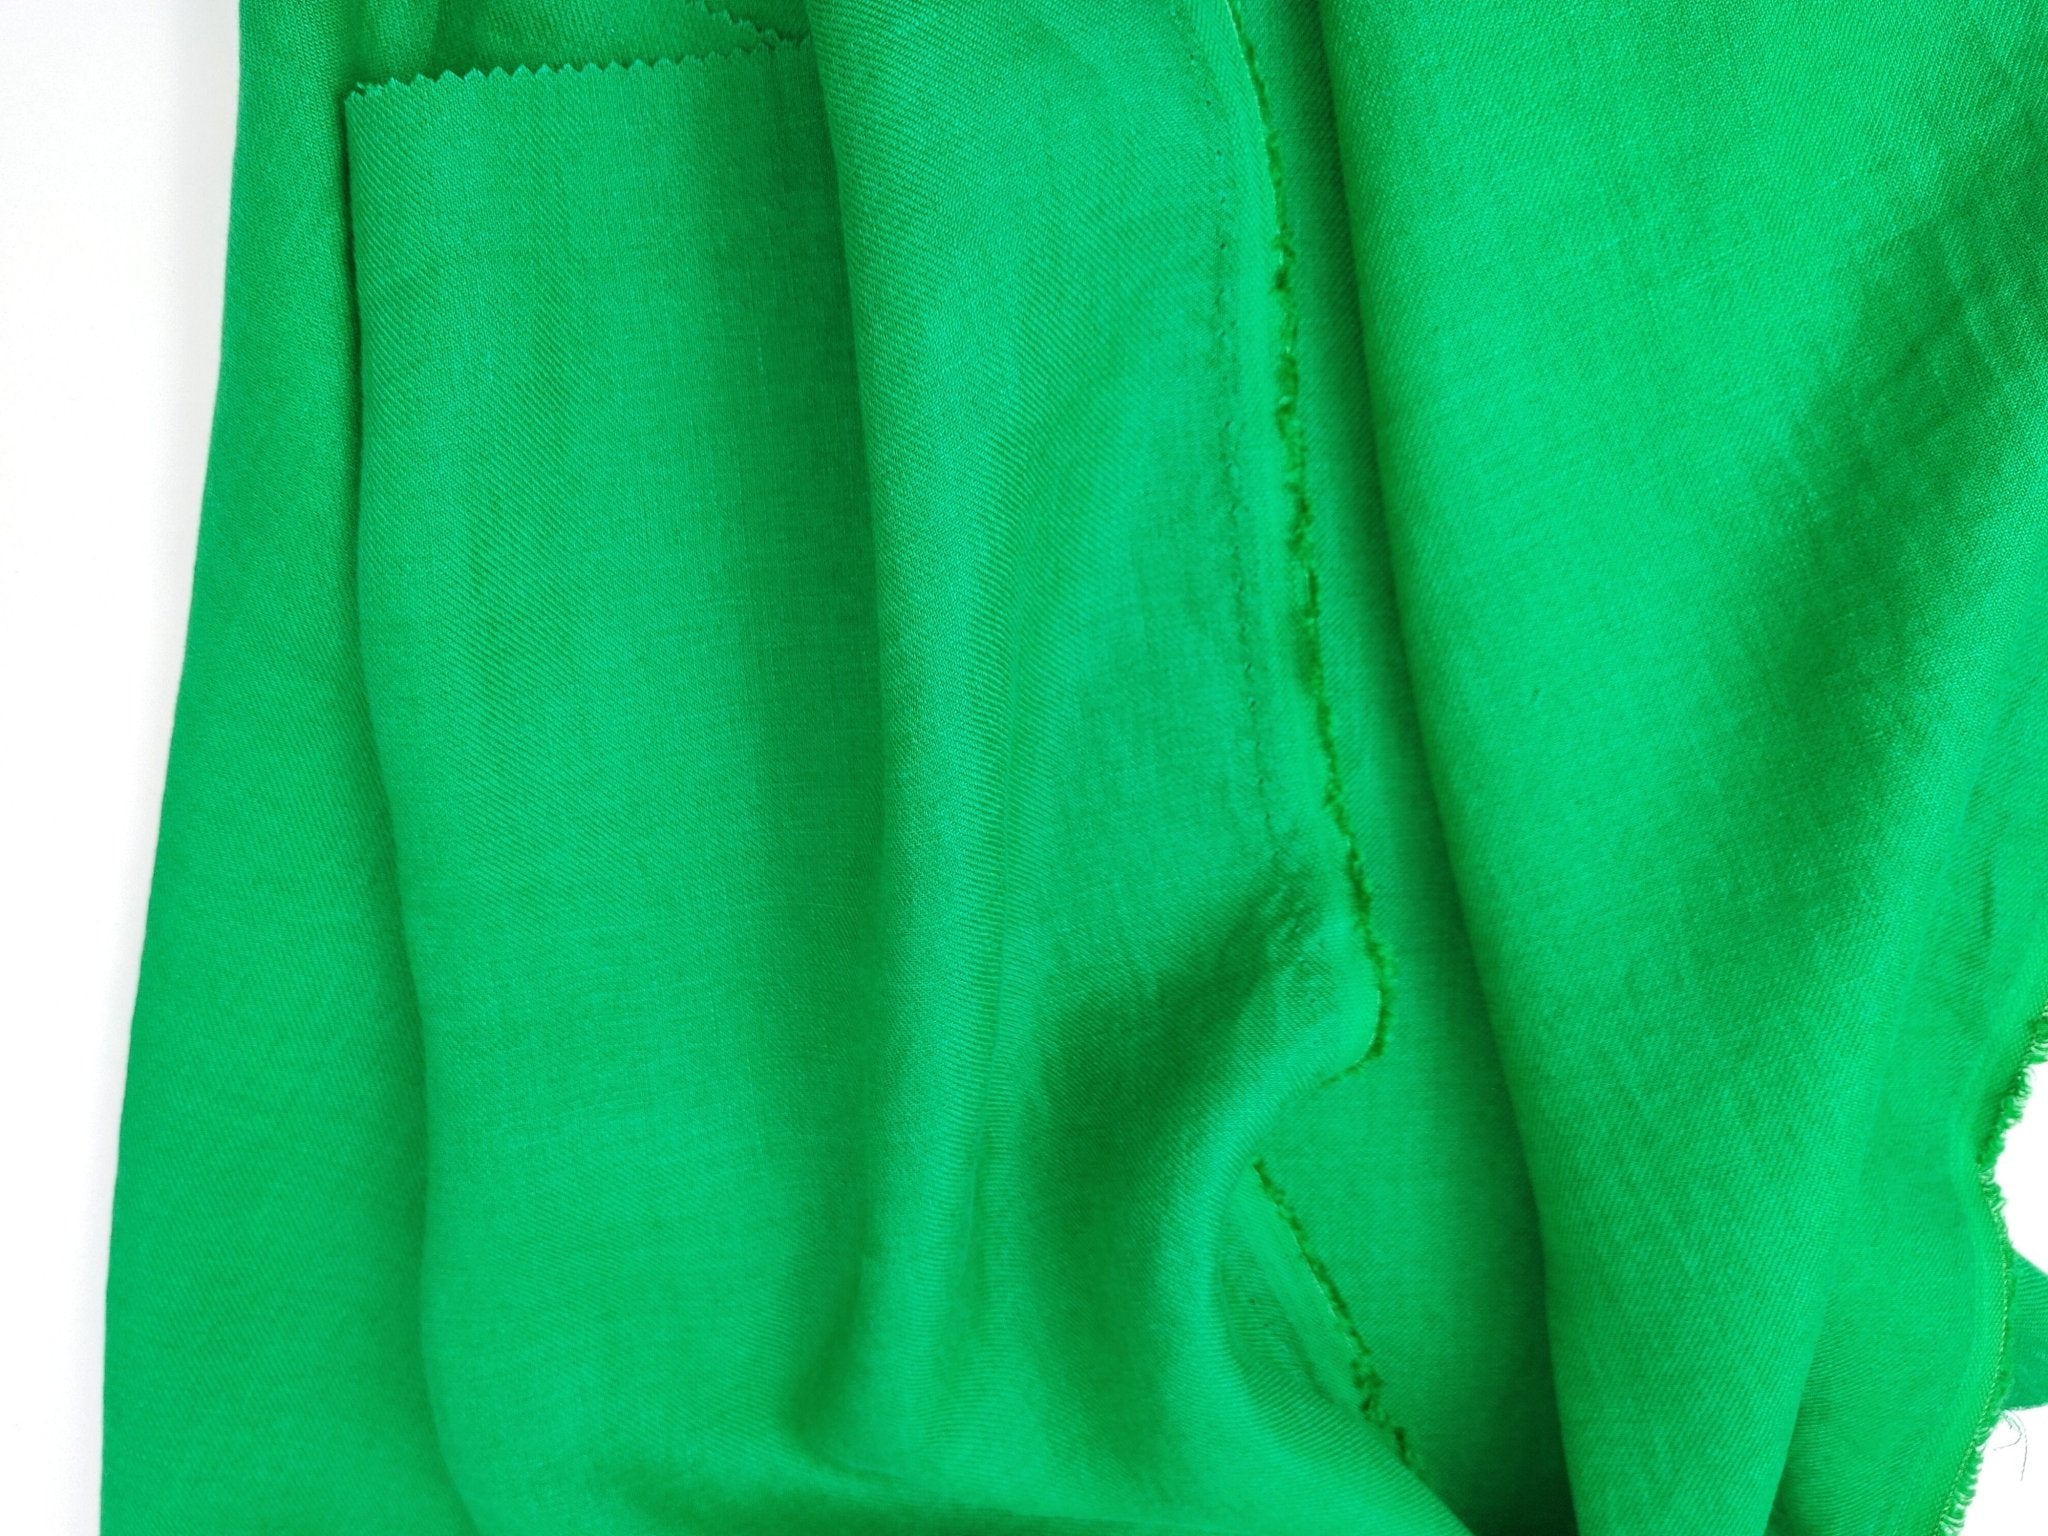 Twill Weave 100% Linen Fabric - Medium Weight in Green 7595 - The Linen Lab - Green